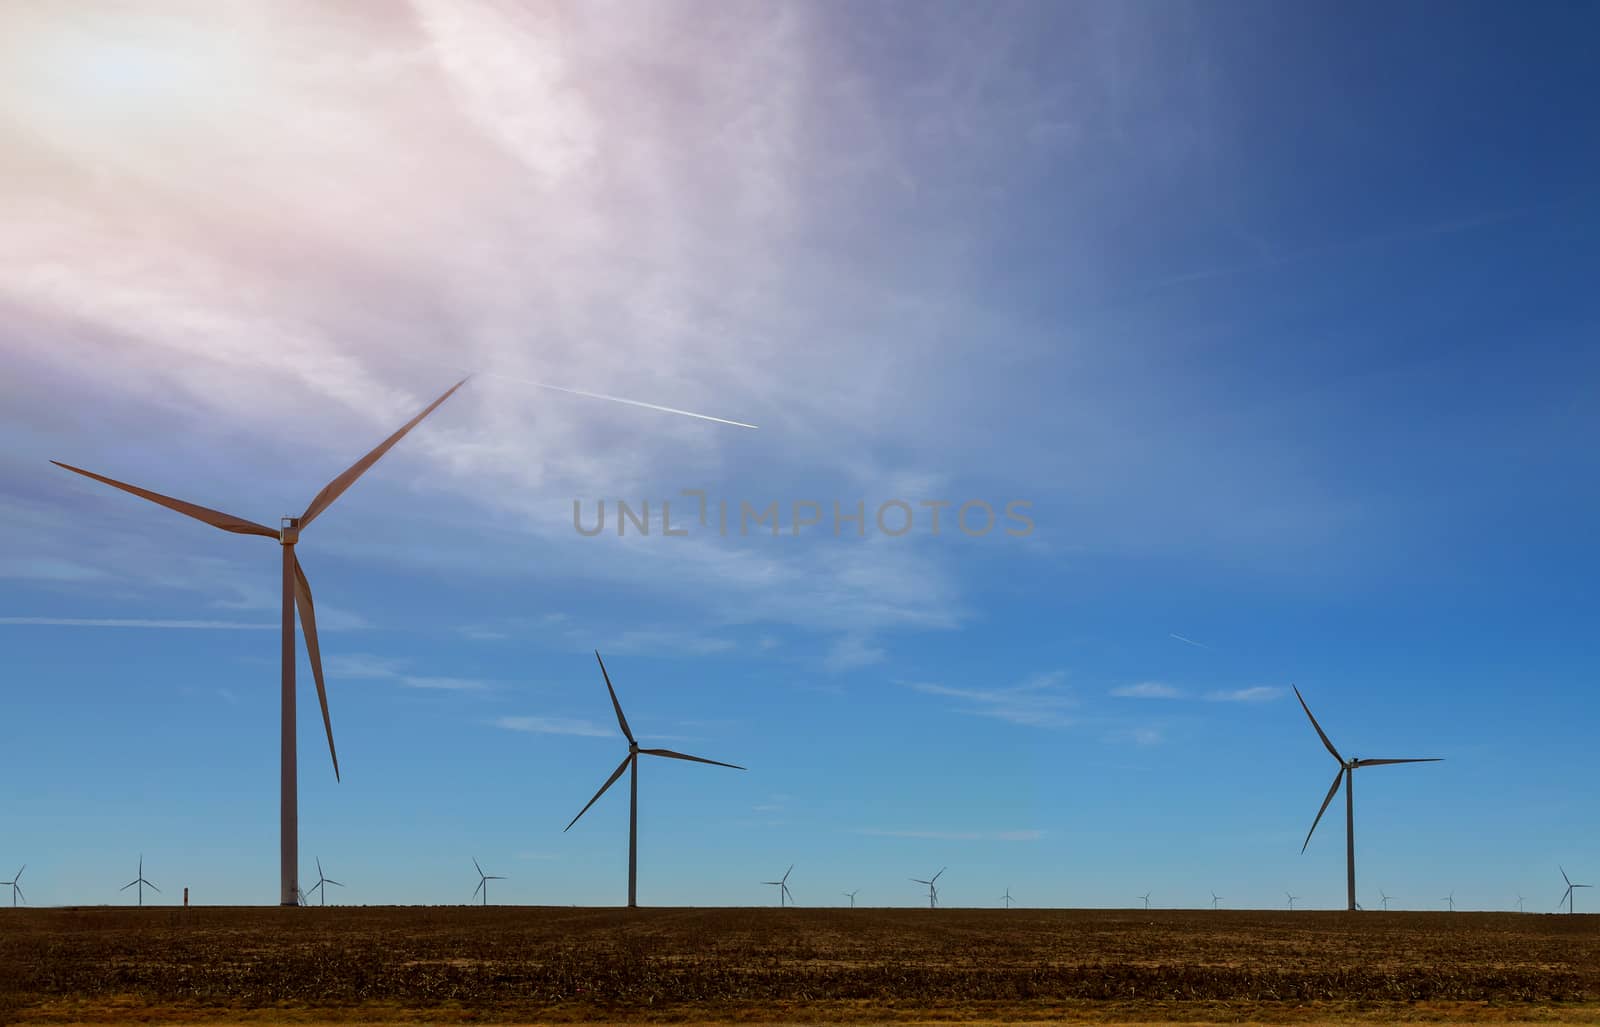 Windmills in the West Texas wind clean renewable energy power